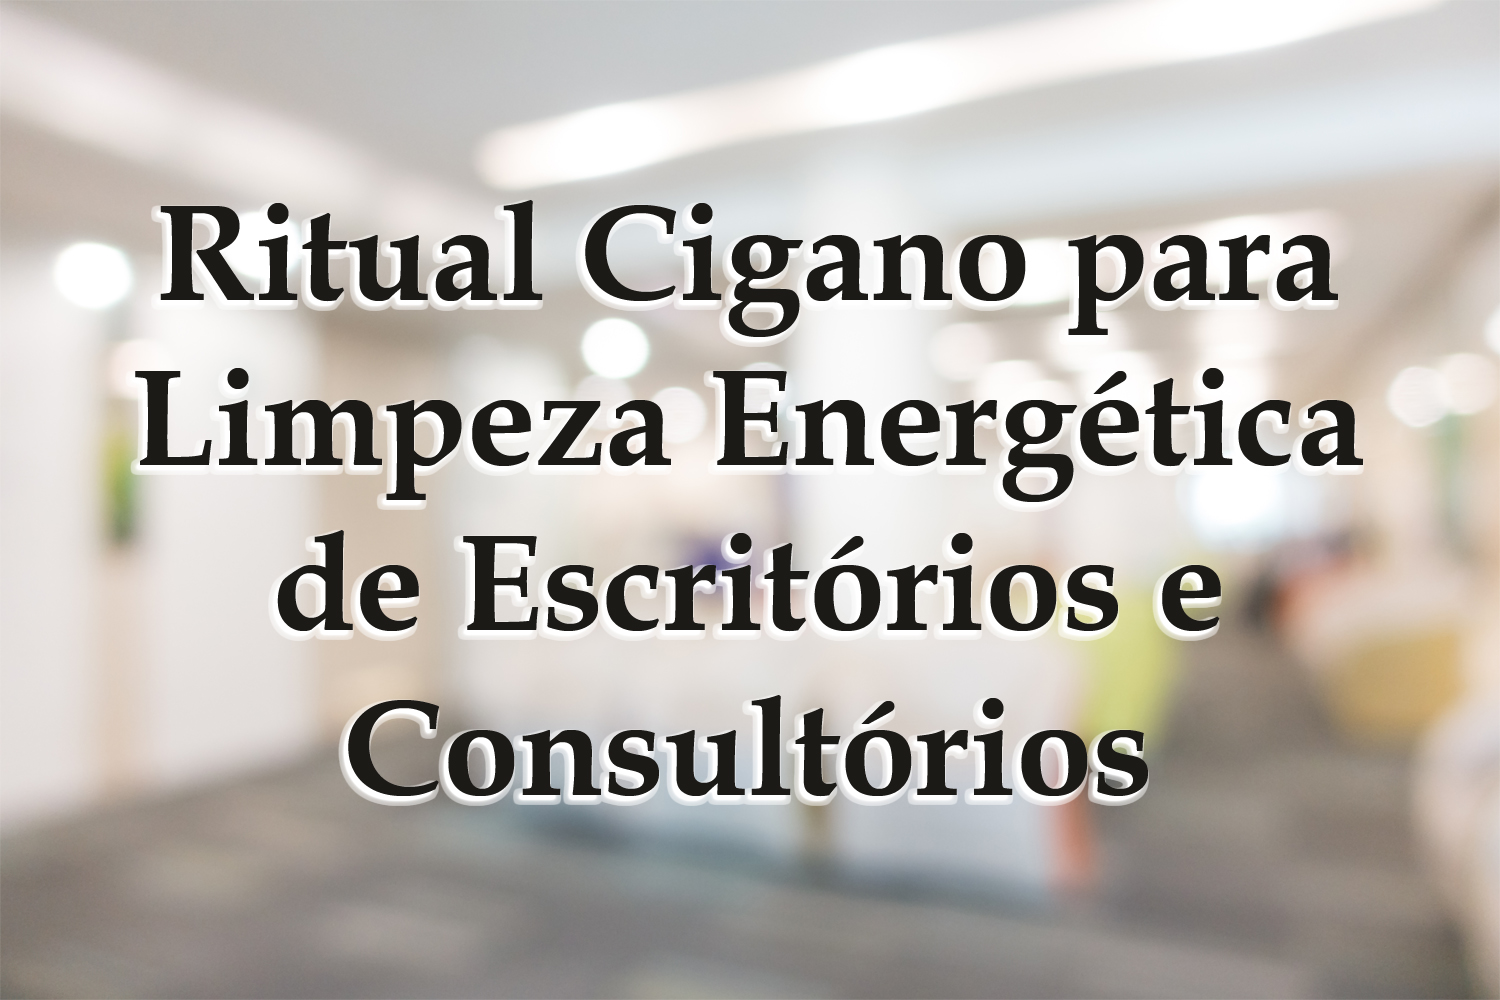 Ritual Cigano para Limpeza Energética de Escritórios e Consultórios